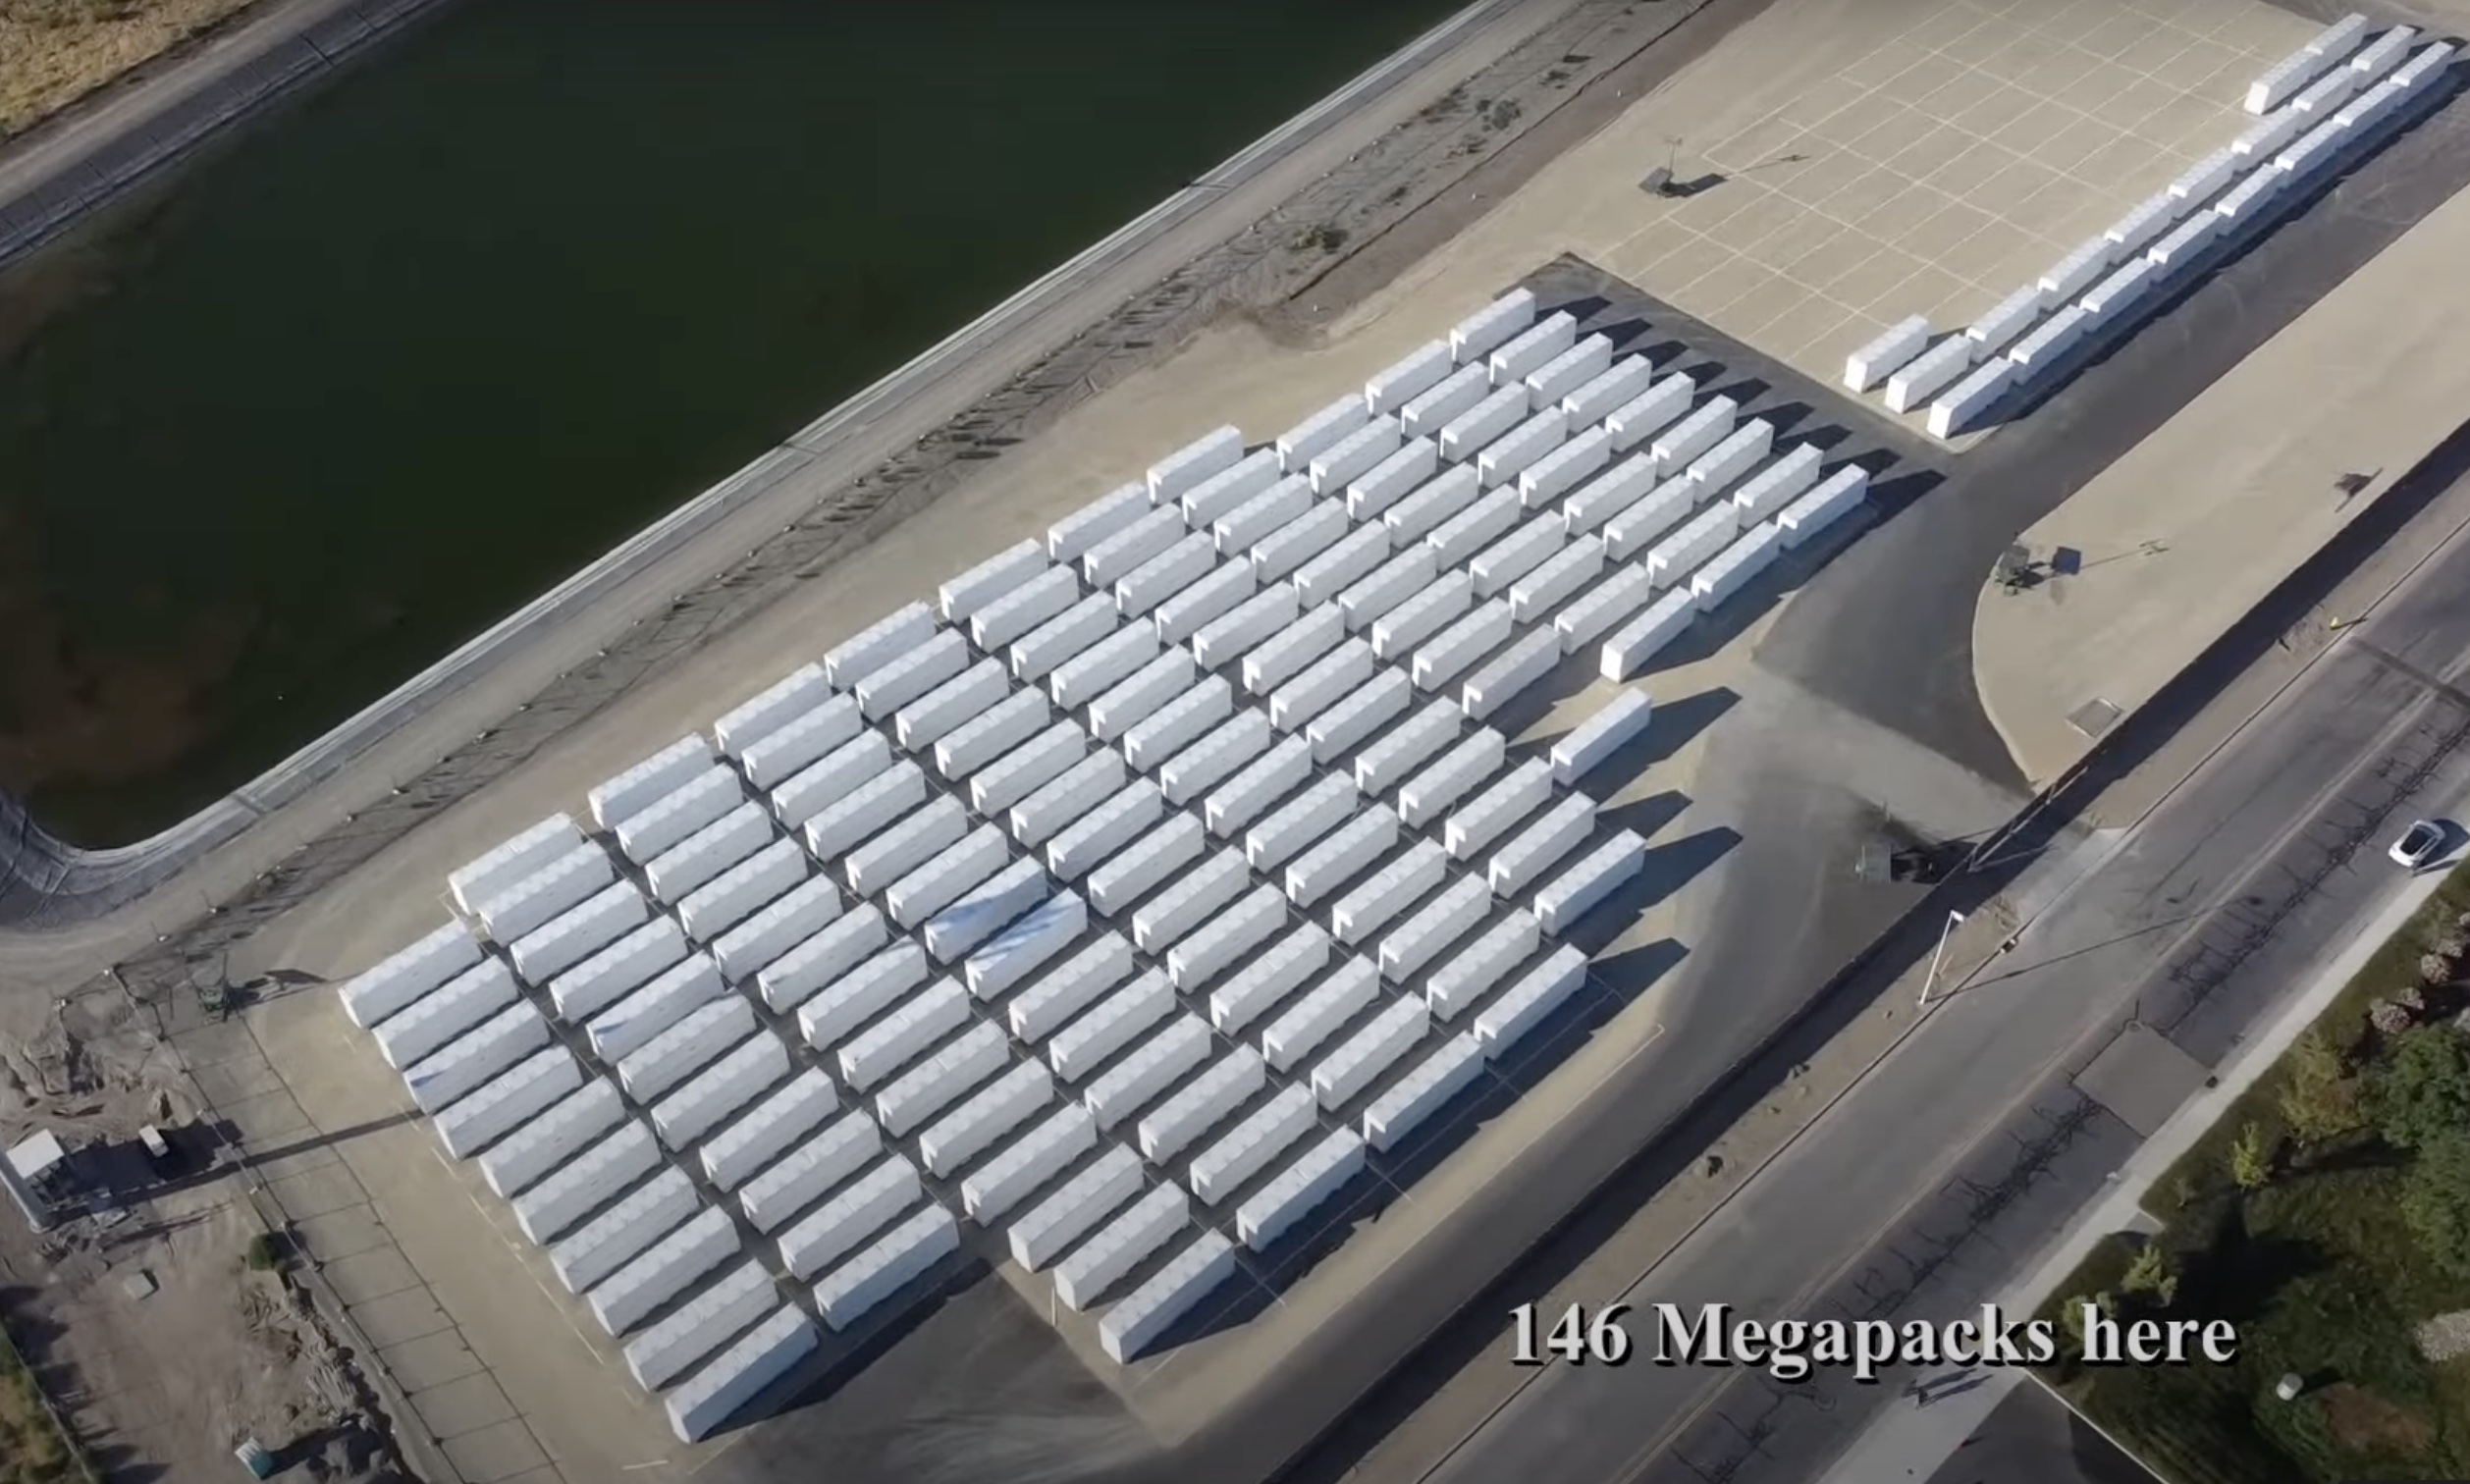 Almost 200 Tesla Megapack batteries spotted in Lathrop Megafactory